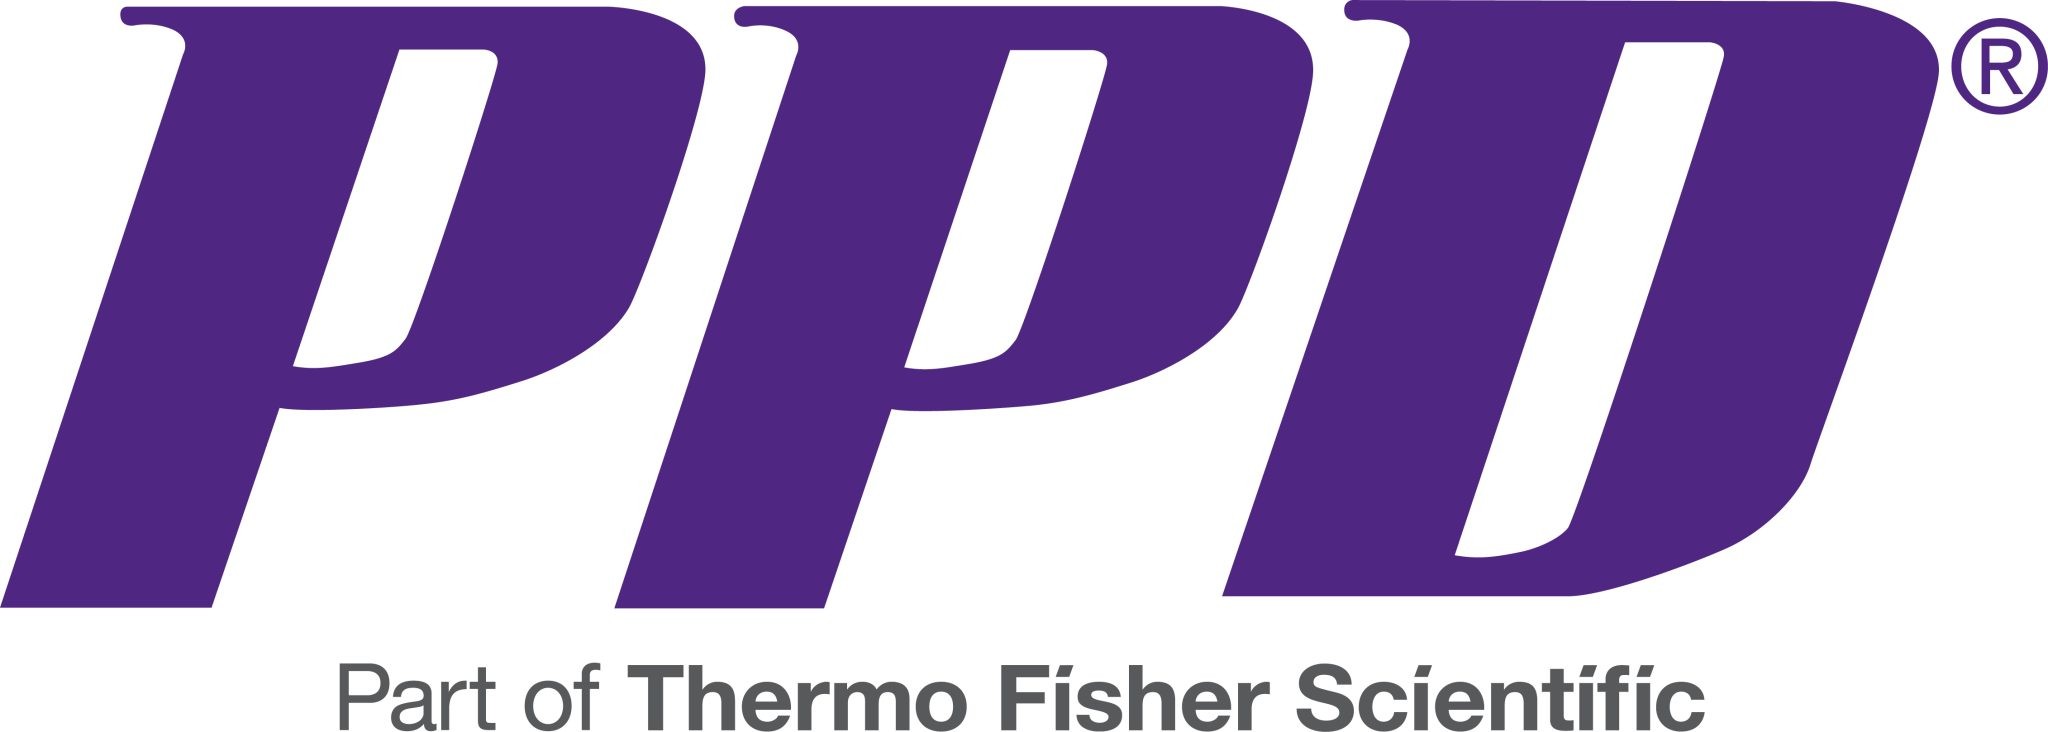 PPD-logo-Purple-1